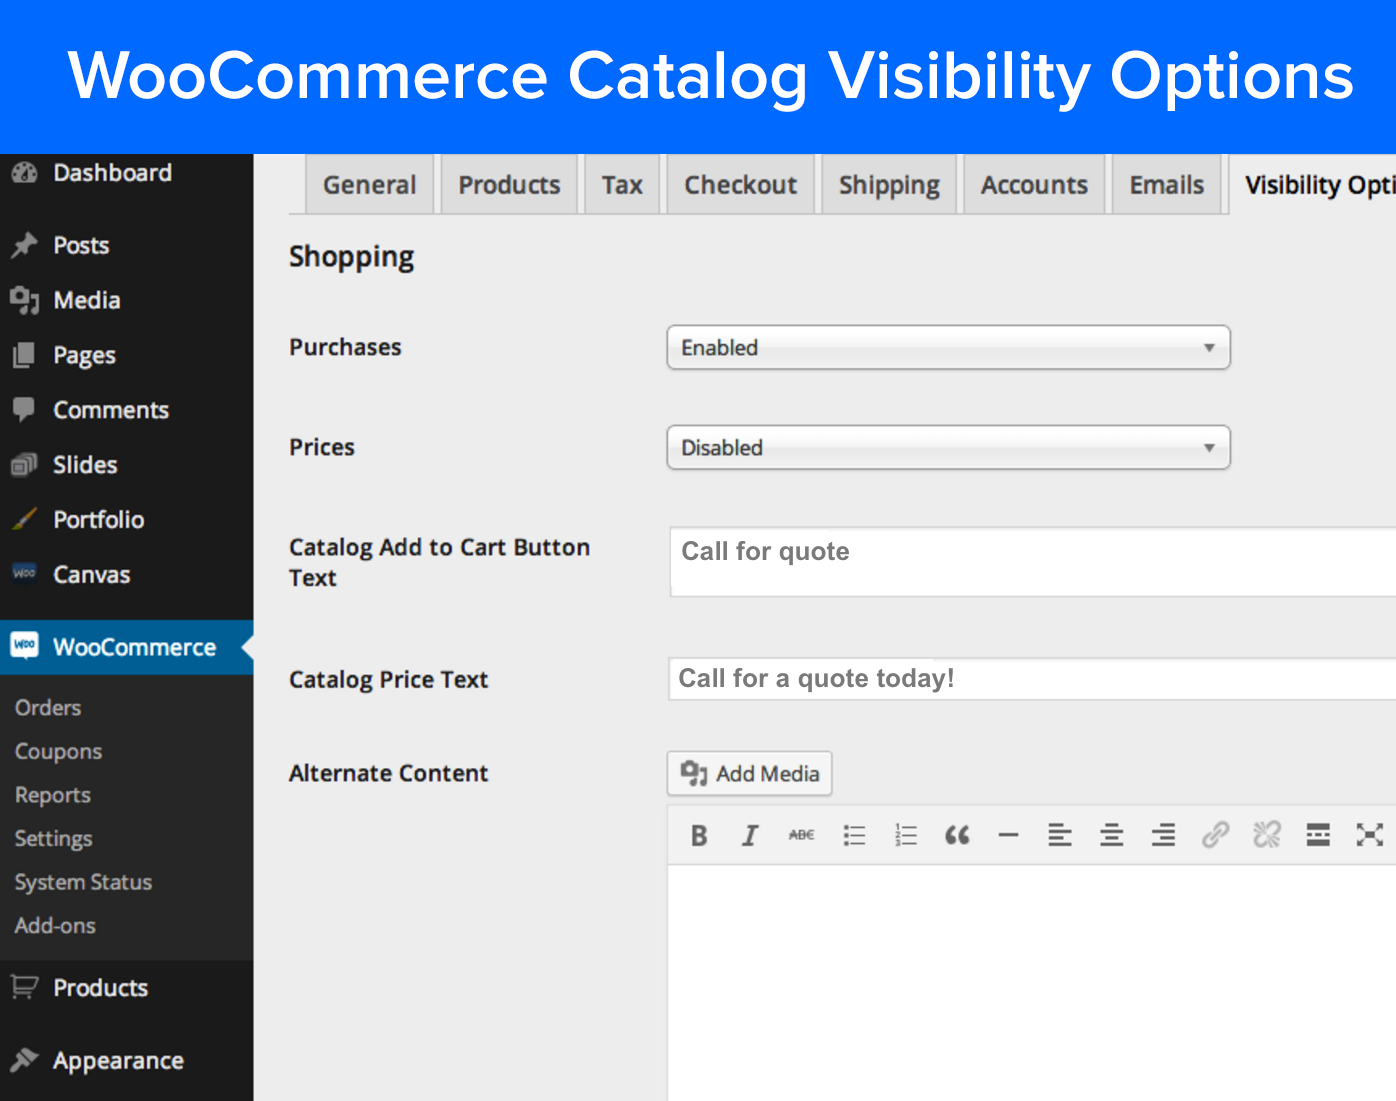 WooCommerce Catalog Visibility Options admin settings.